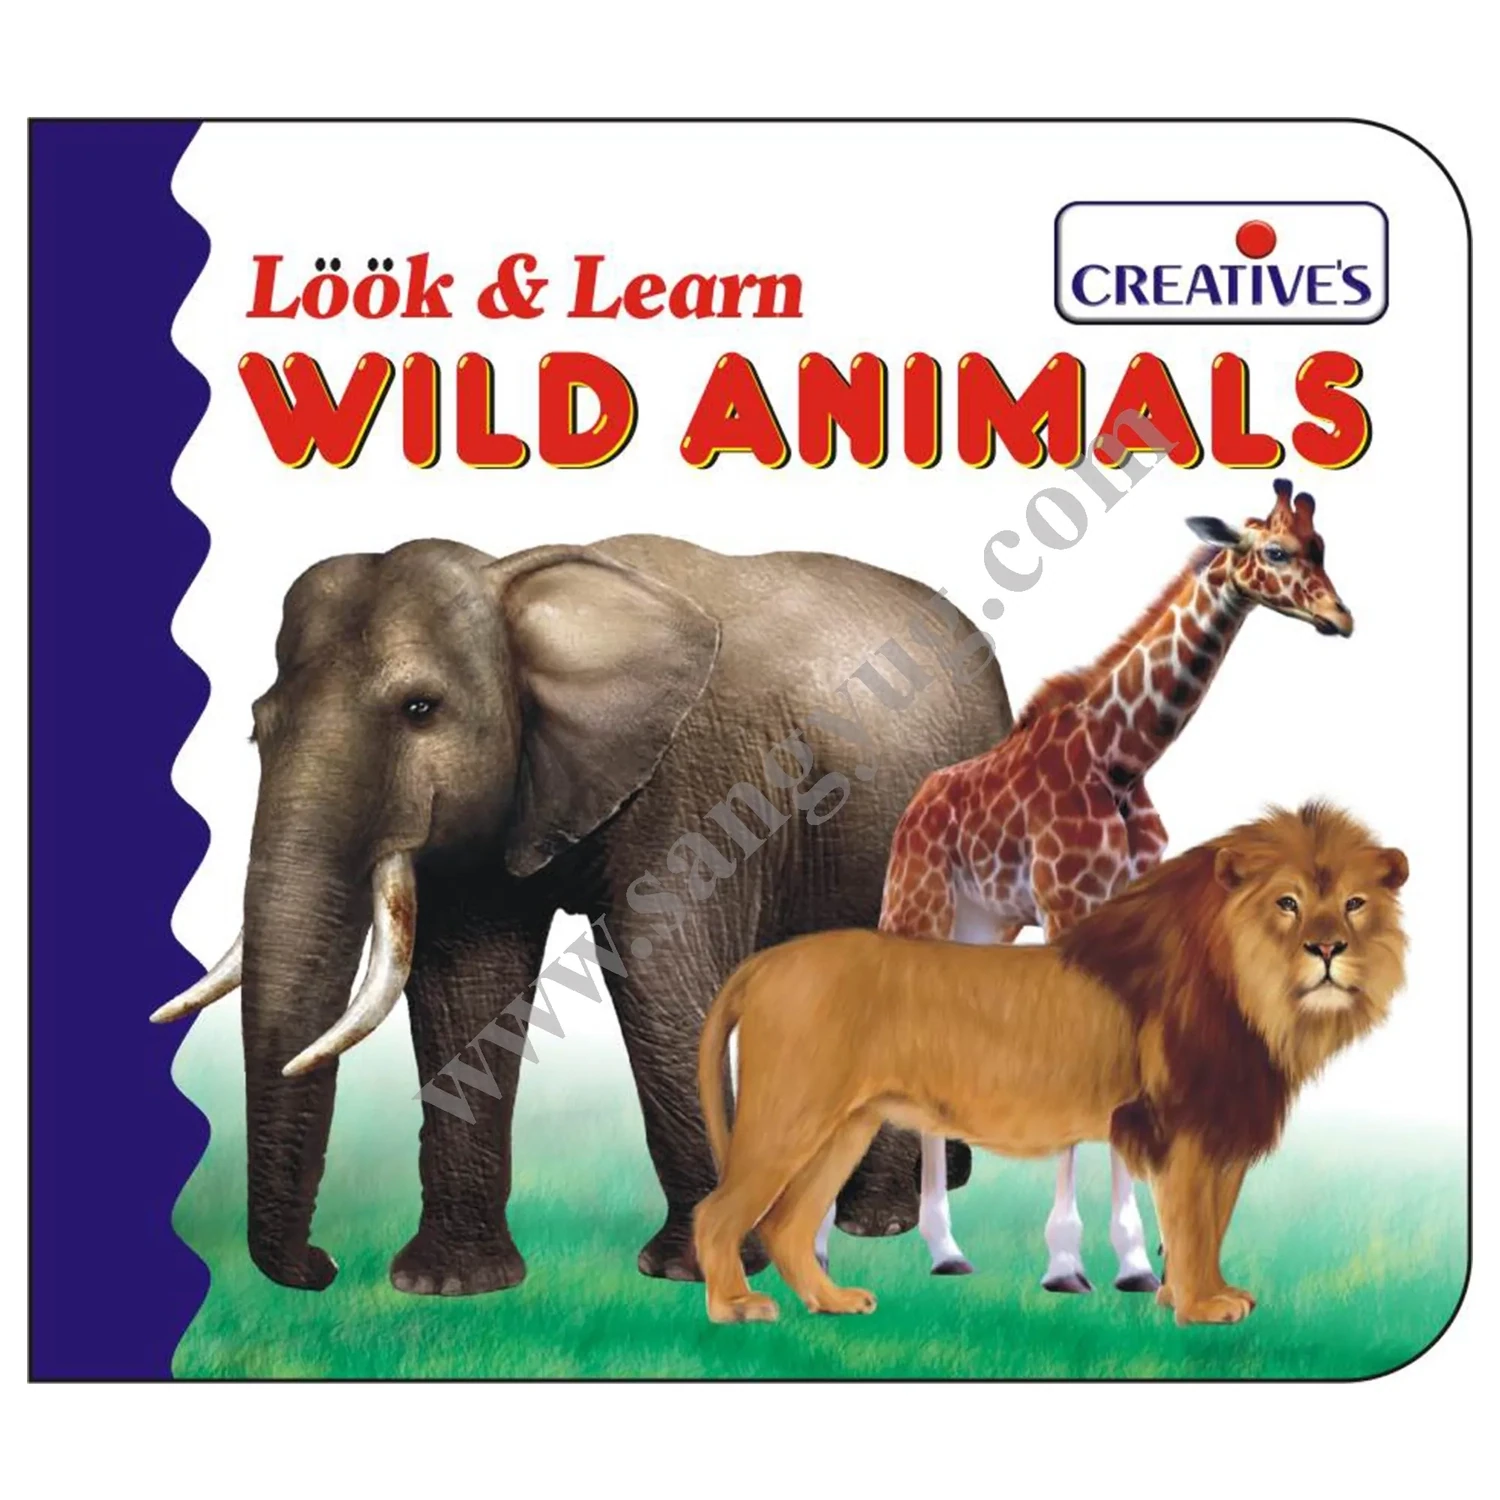 Creative look & learn bord book - WILD ANIMALS 524-1